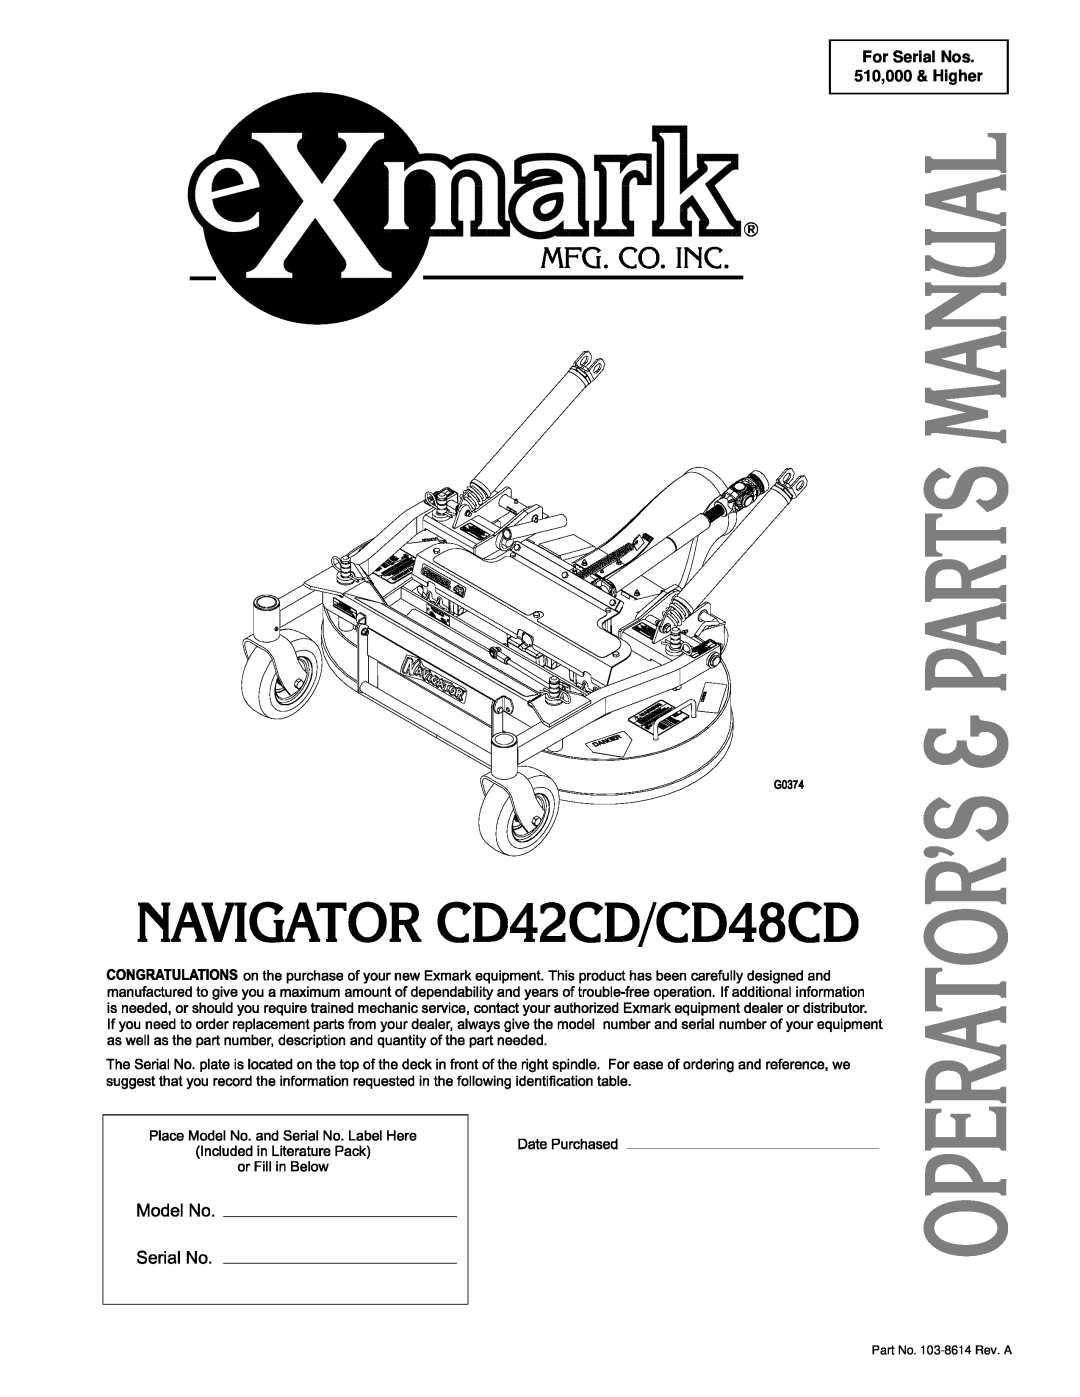 Exmark CD42CD, Cd42cd, Cd48cd manual For Serial Nos 510,000 & Higher, Part No. 103-8614 Rev. A 